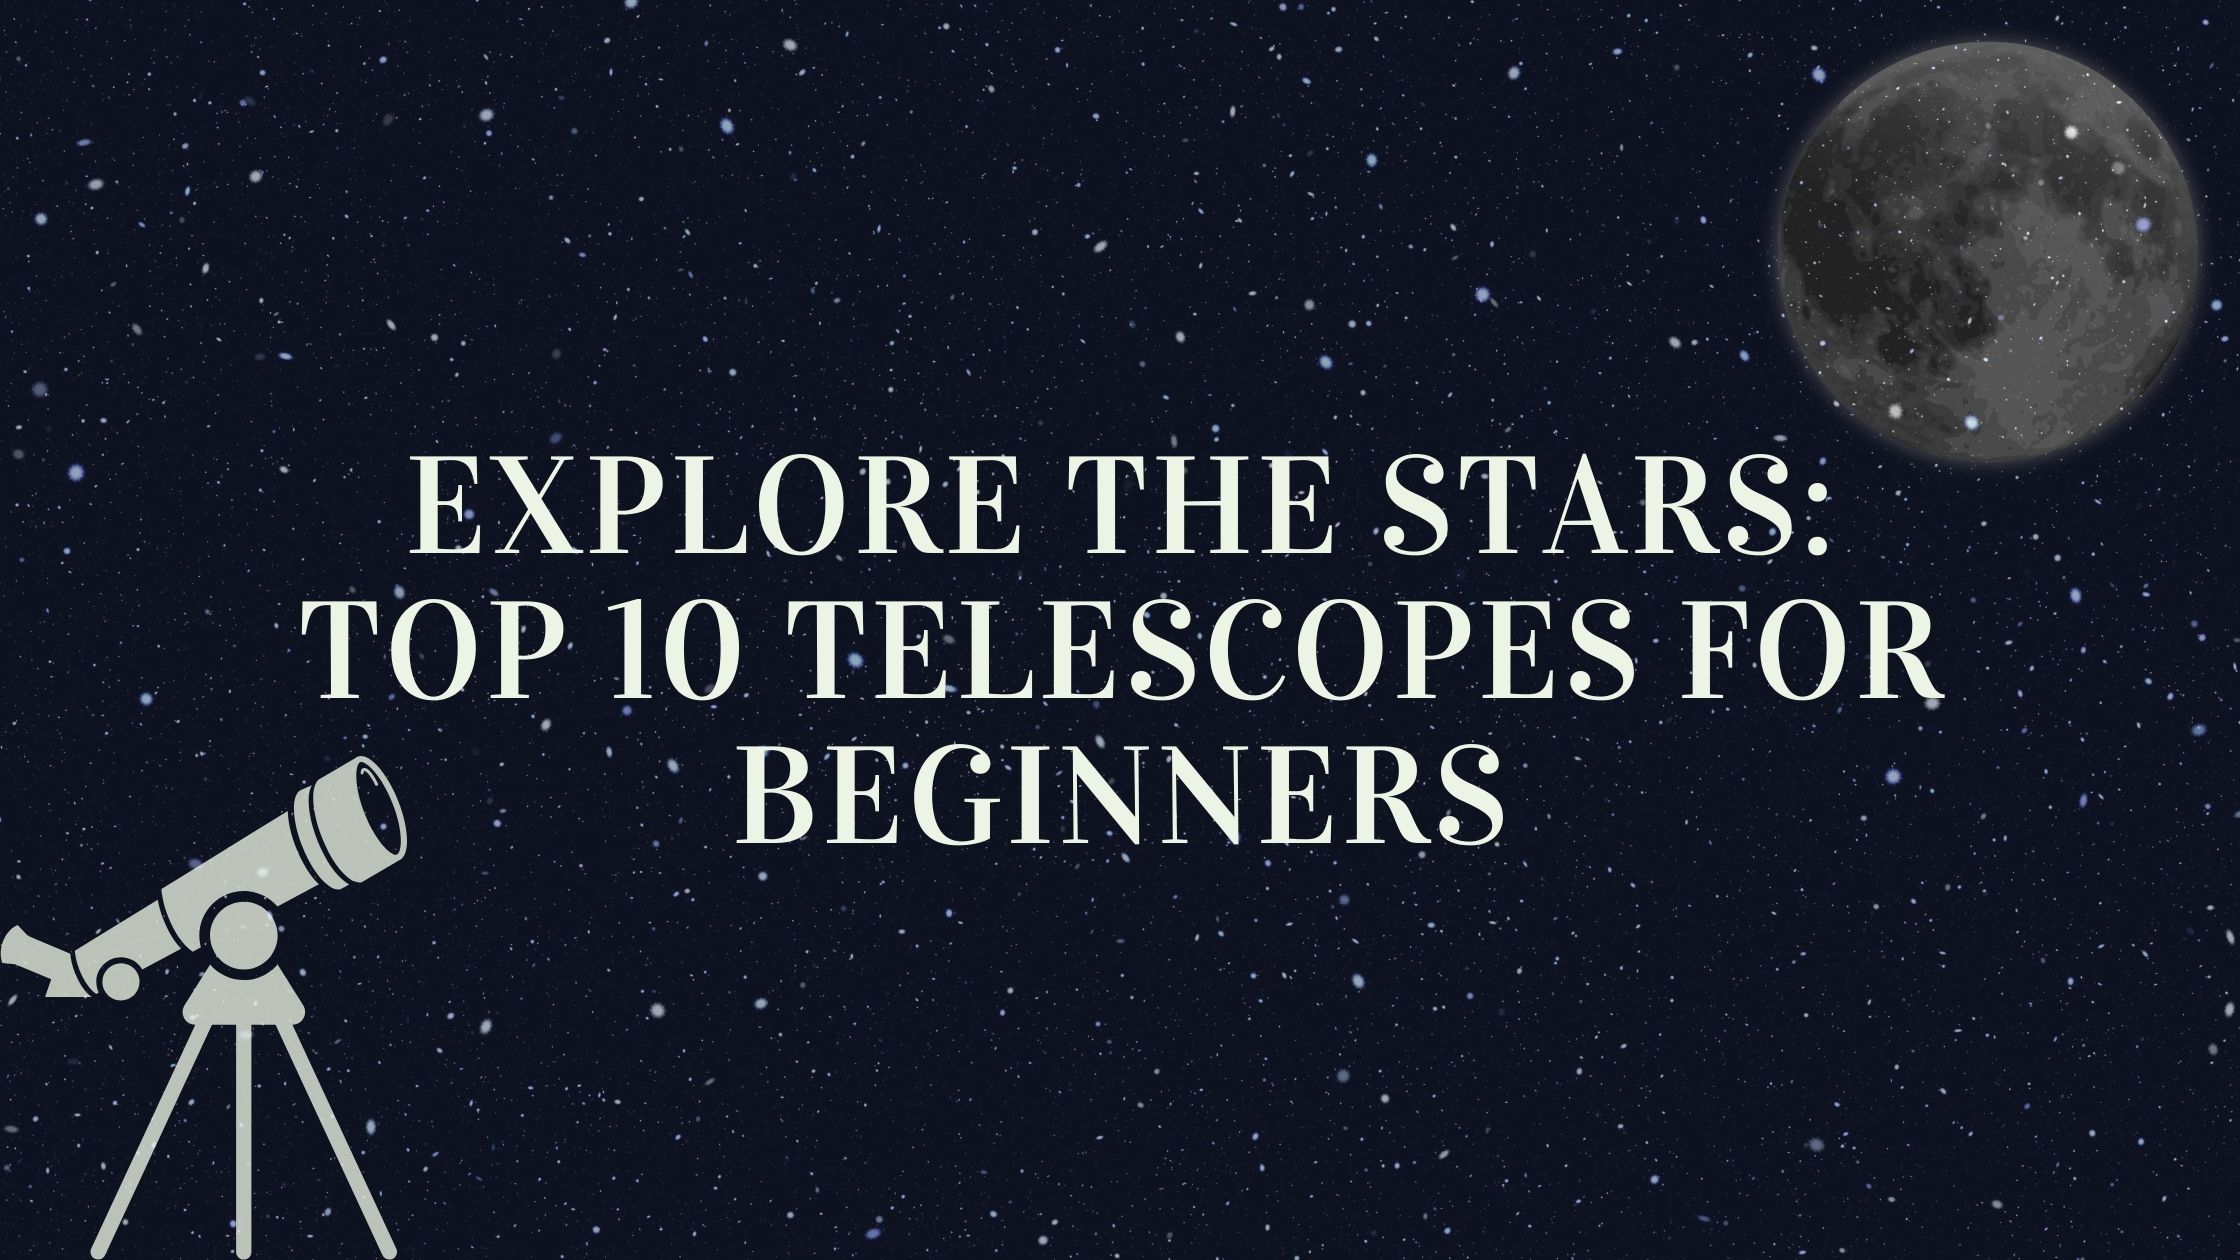 Top Pick Telescopes for Beginners